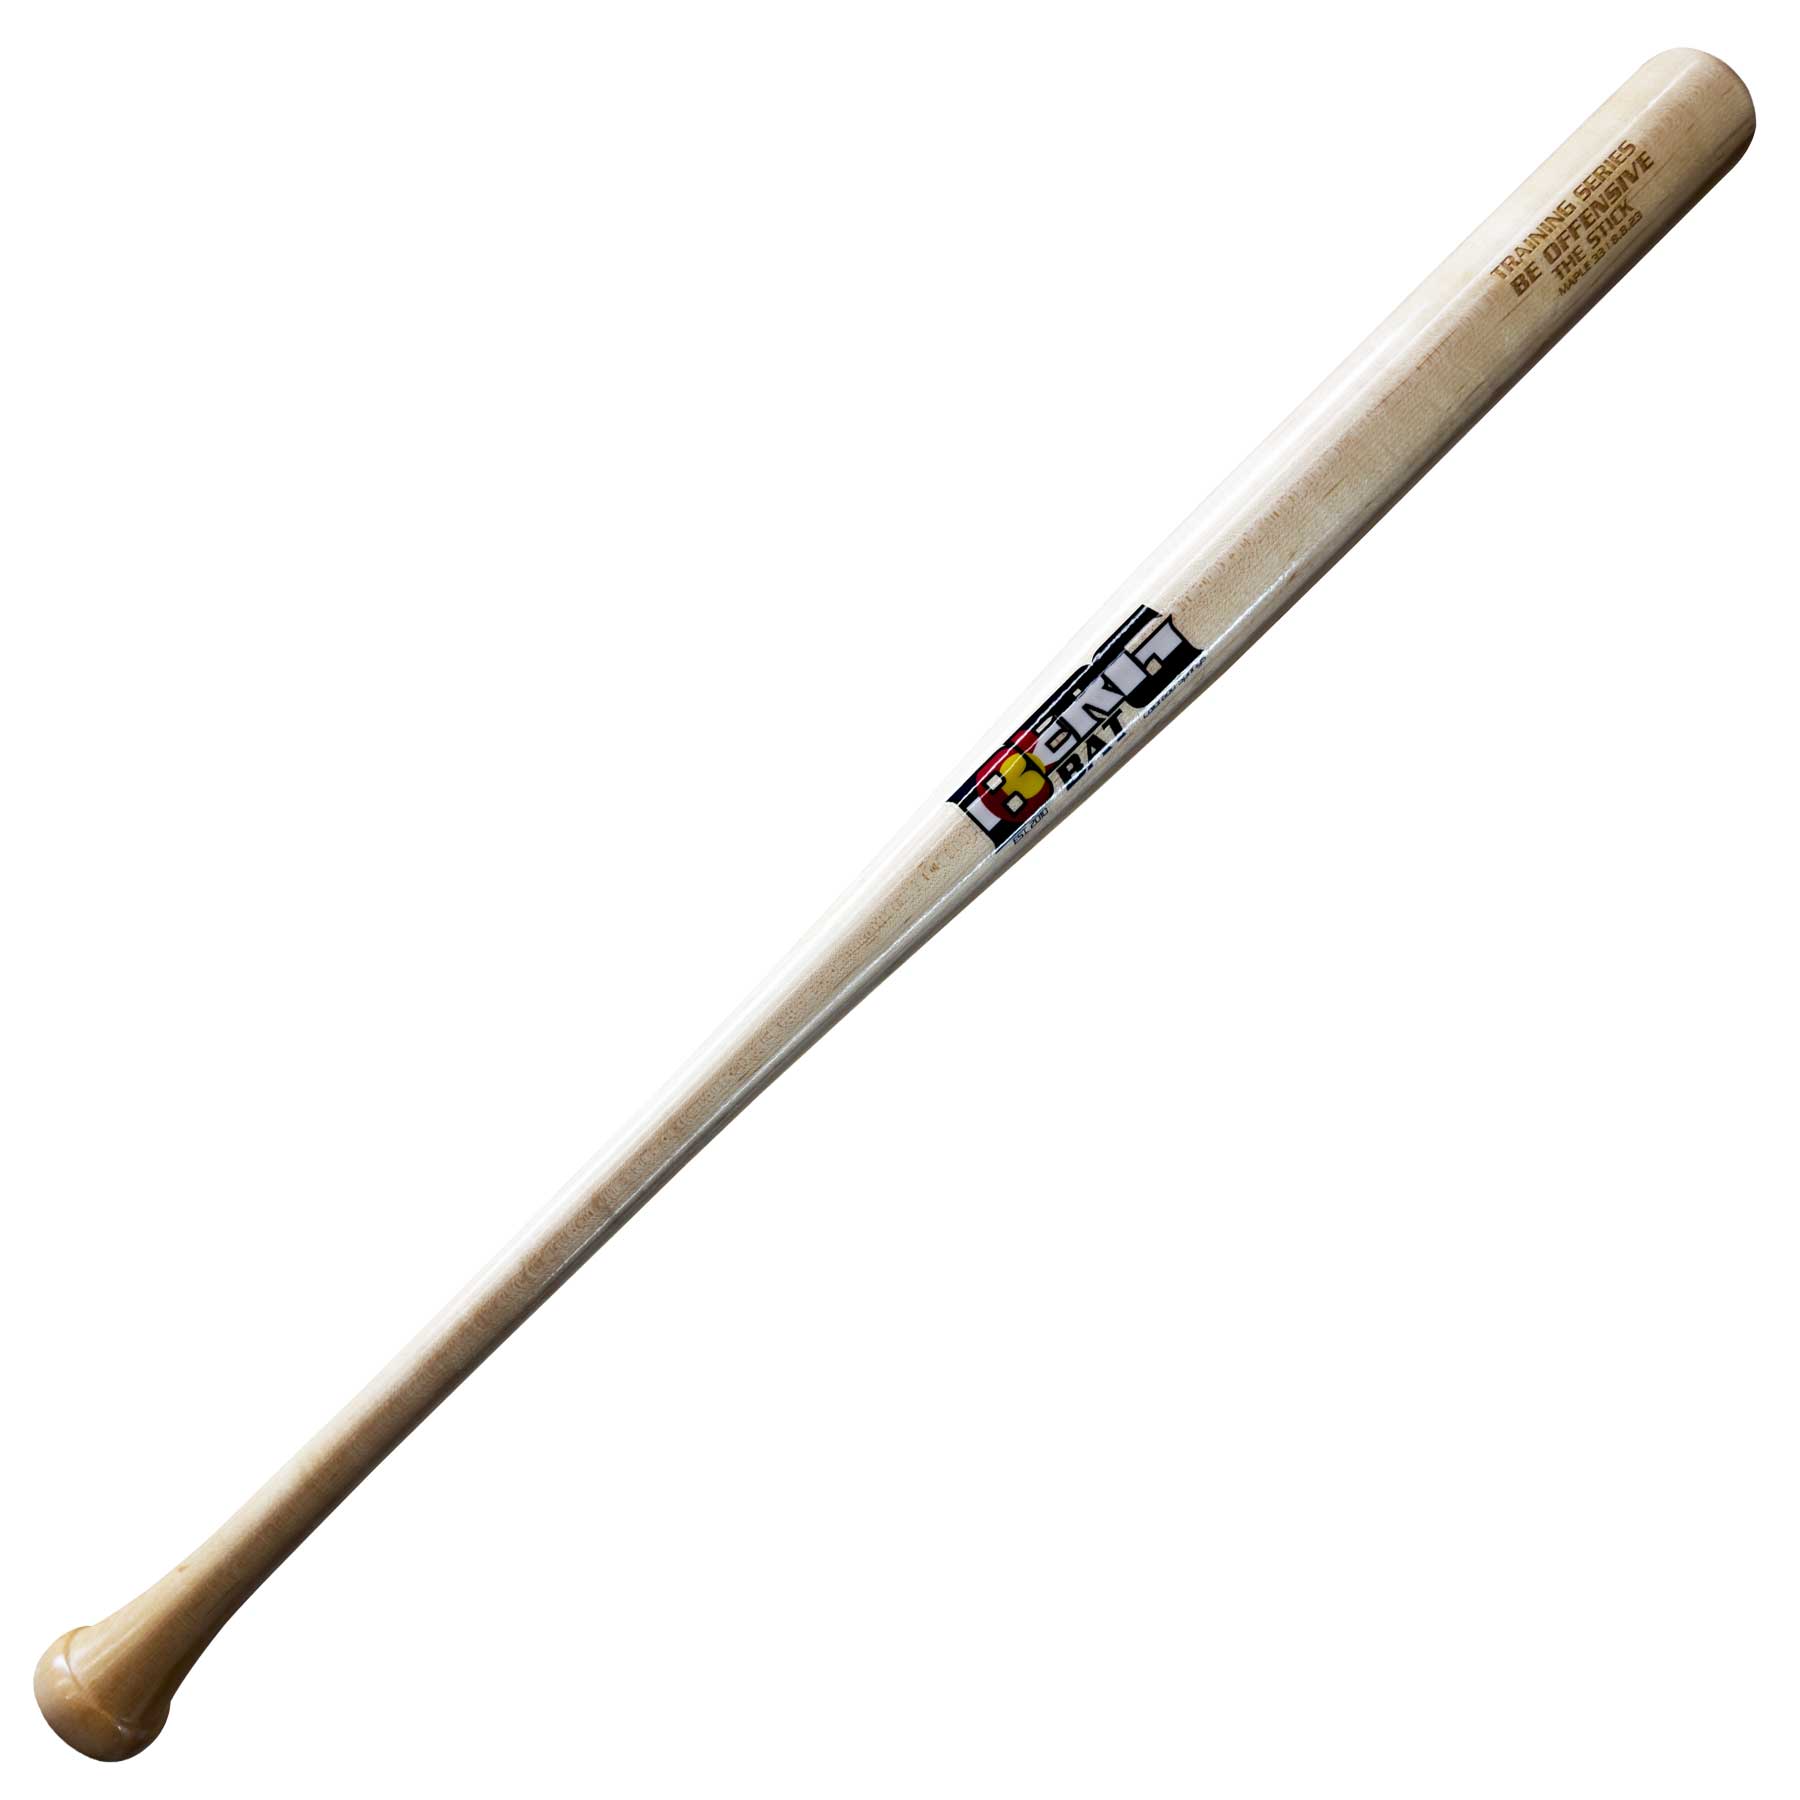 The Stick – Berg Bat Company